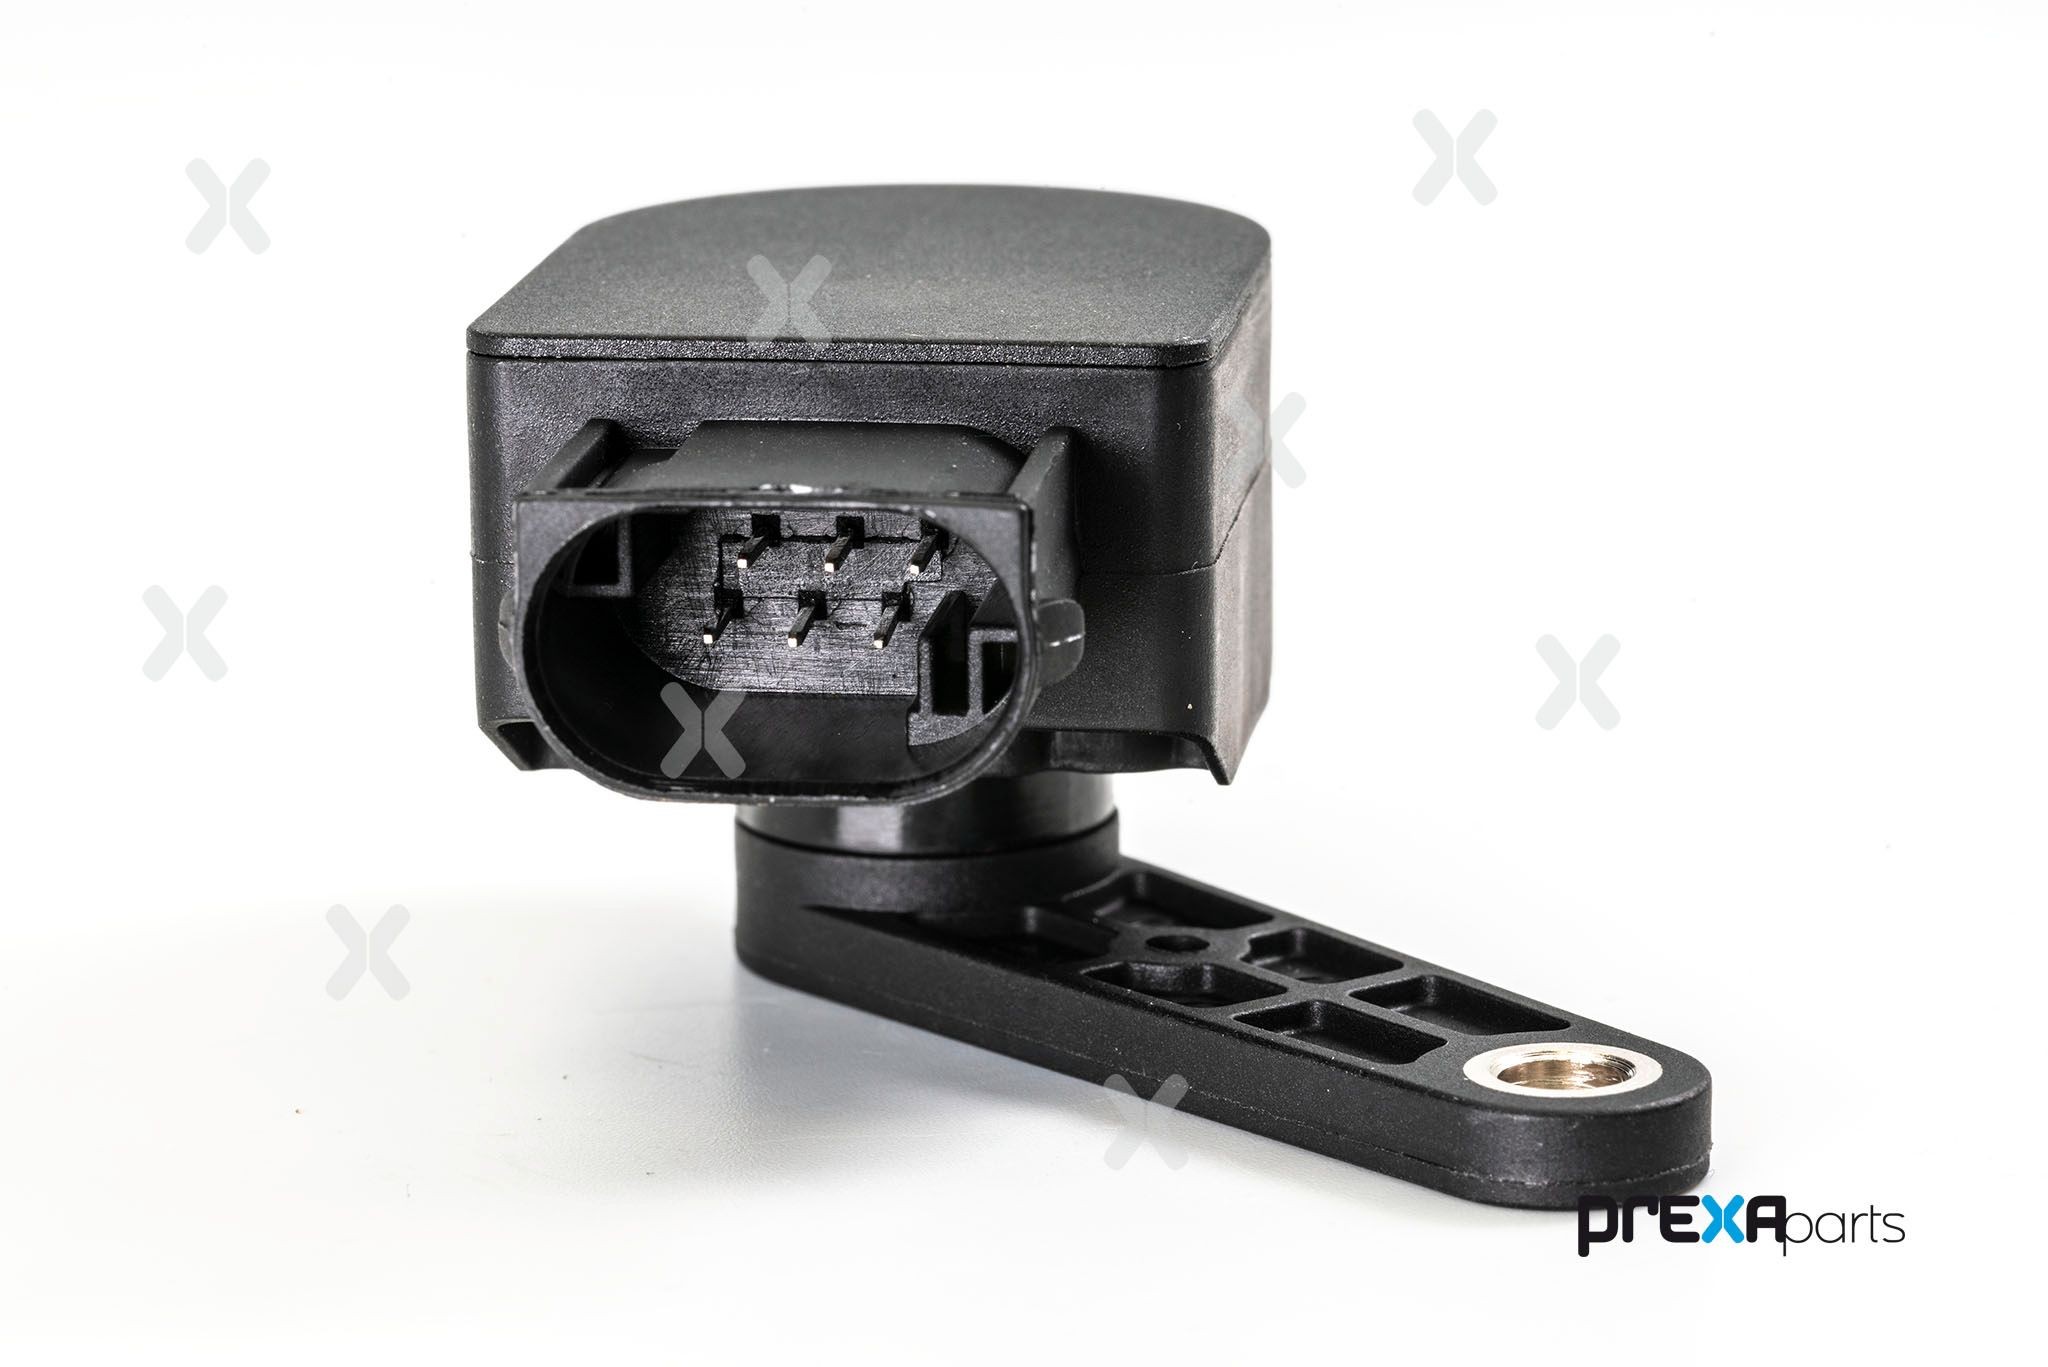 P303048 Sensor, Xenon light (headlight range adjustment) PREXAparts P303048 review and test